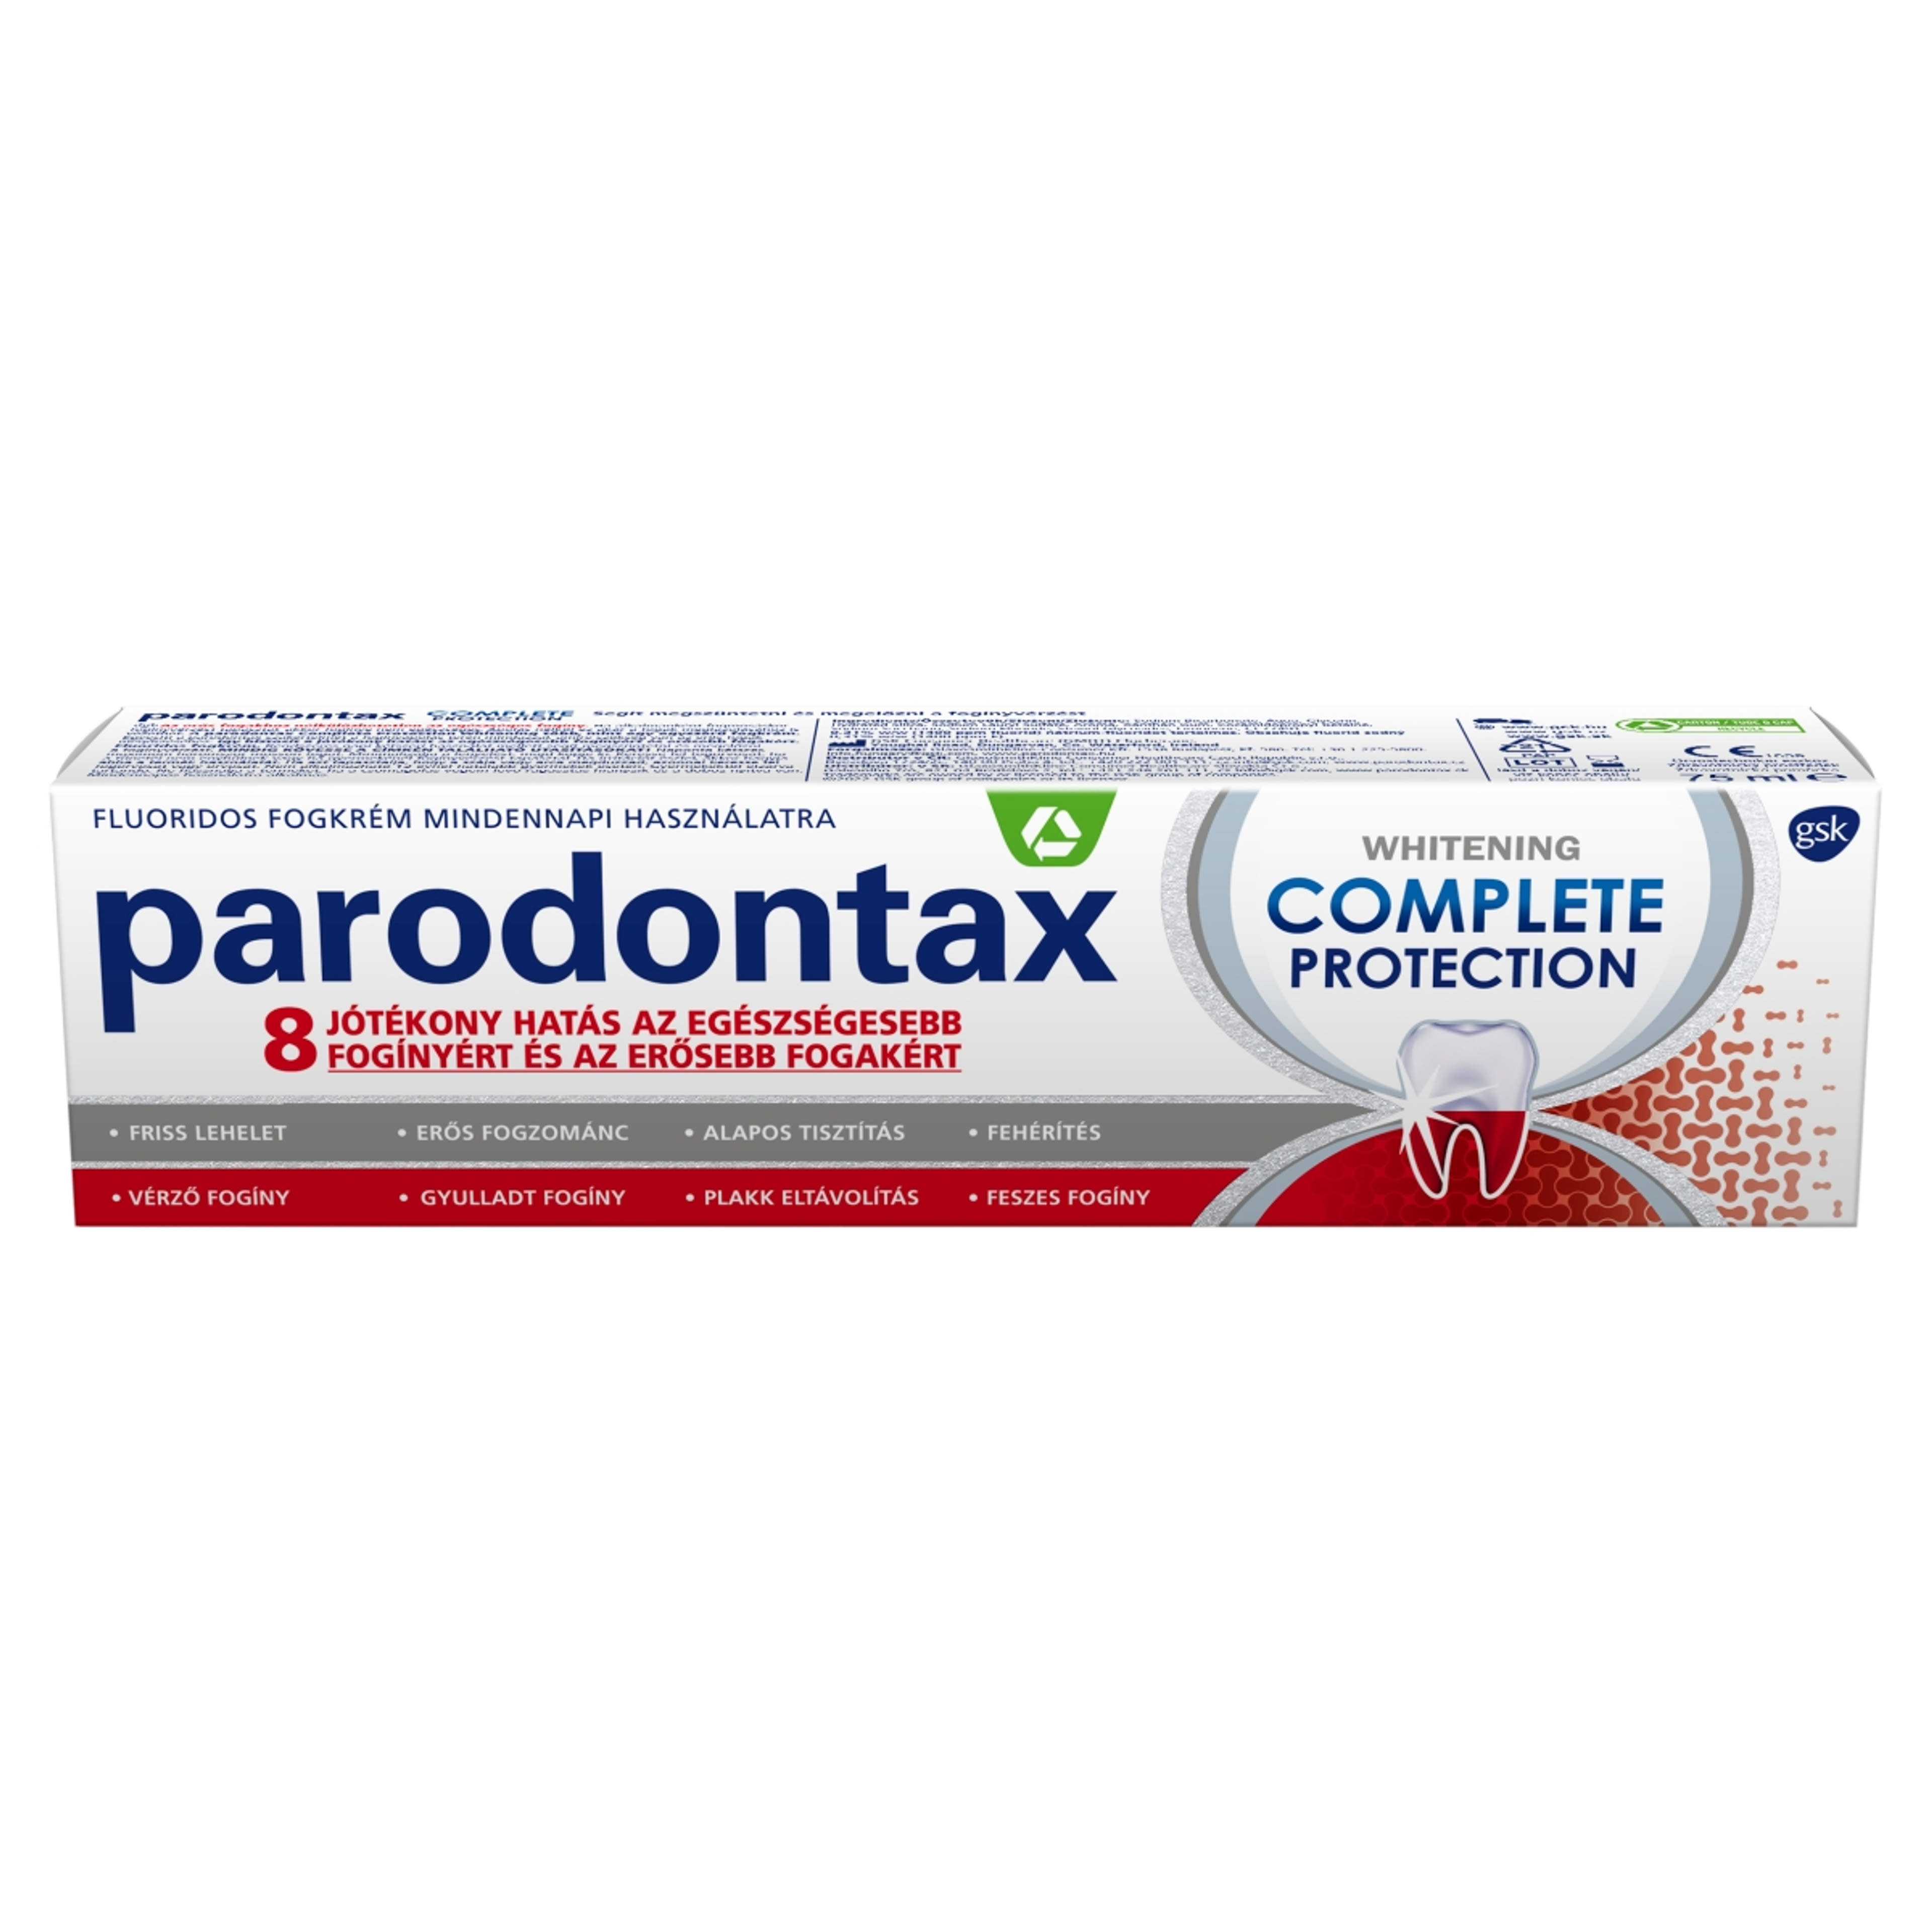 Parodontax Complete Protection Whitening fogkrém - 75 ml